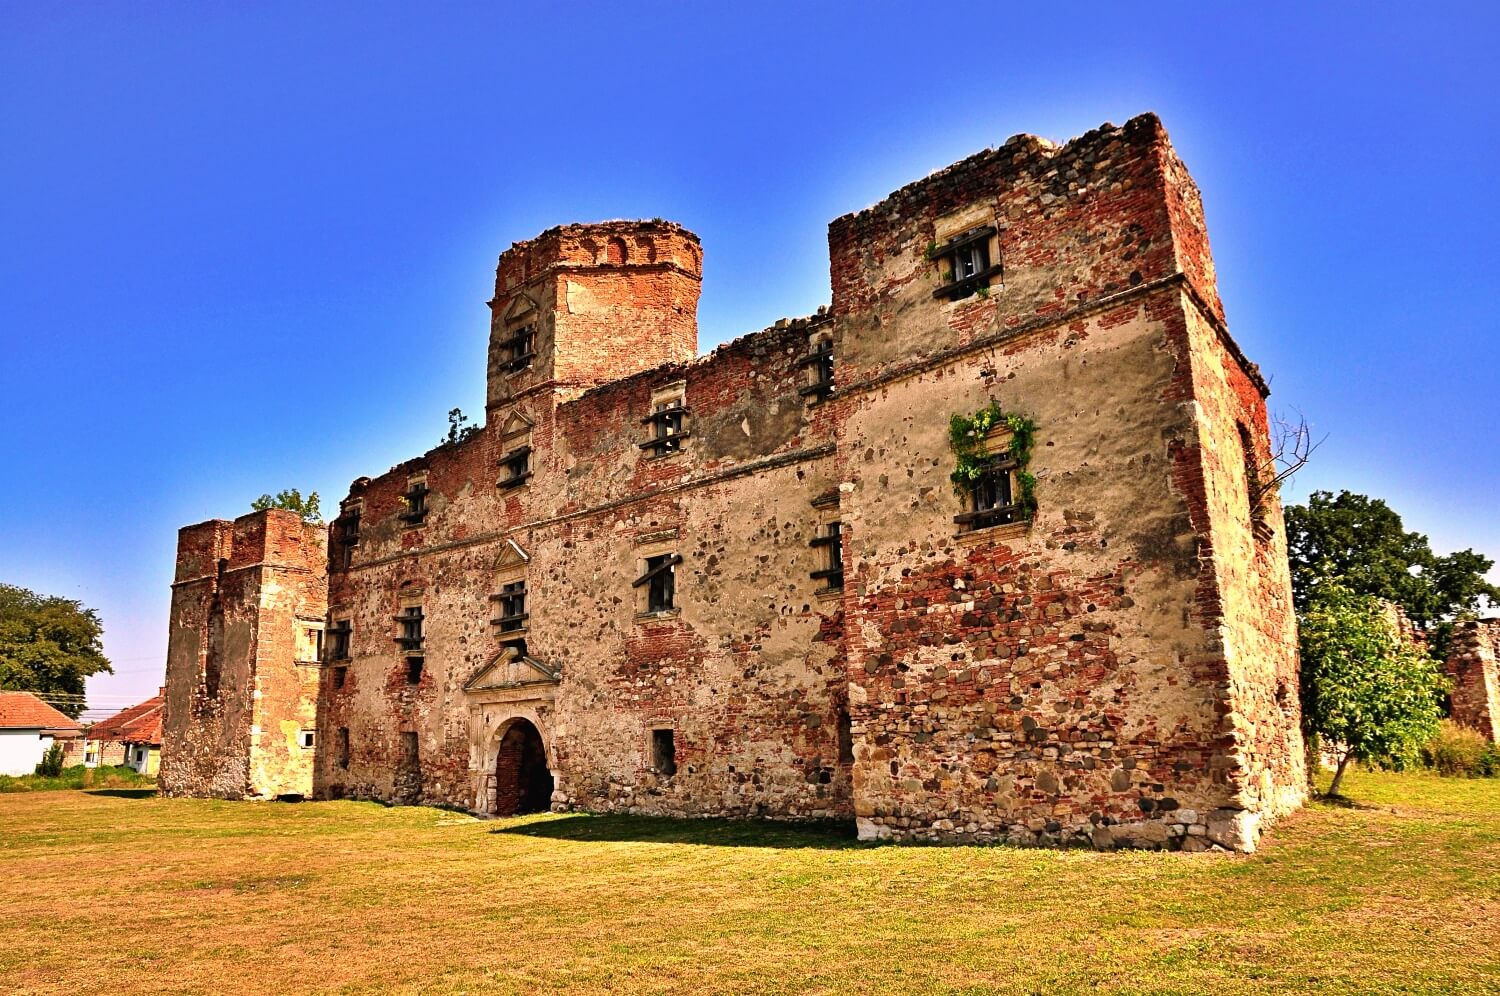 Lónyai Castle (Medieșu Aurit)